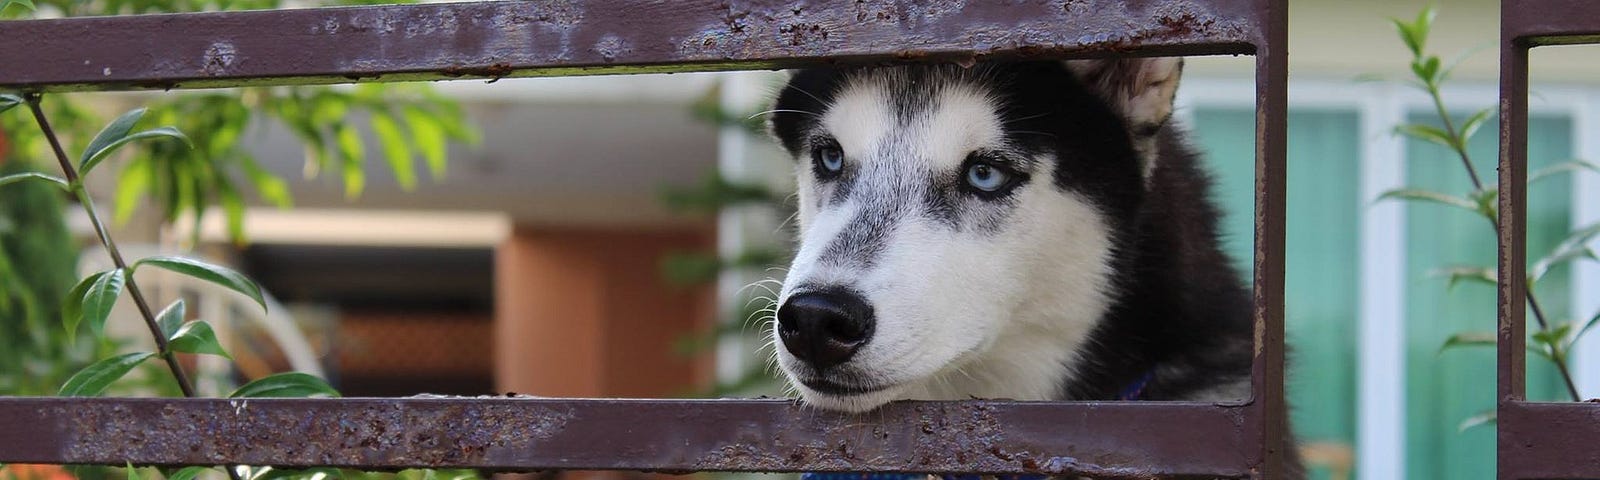 Husky peering through a fence